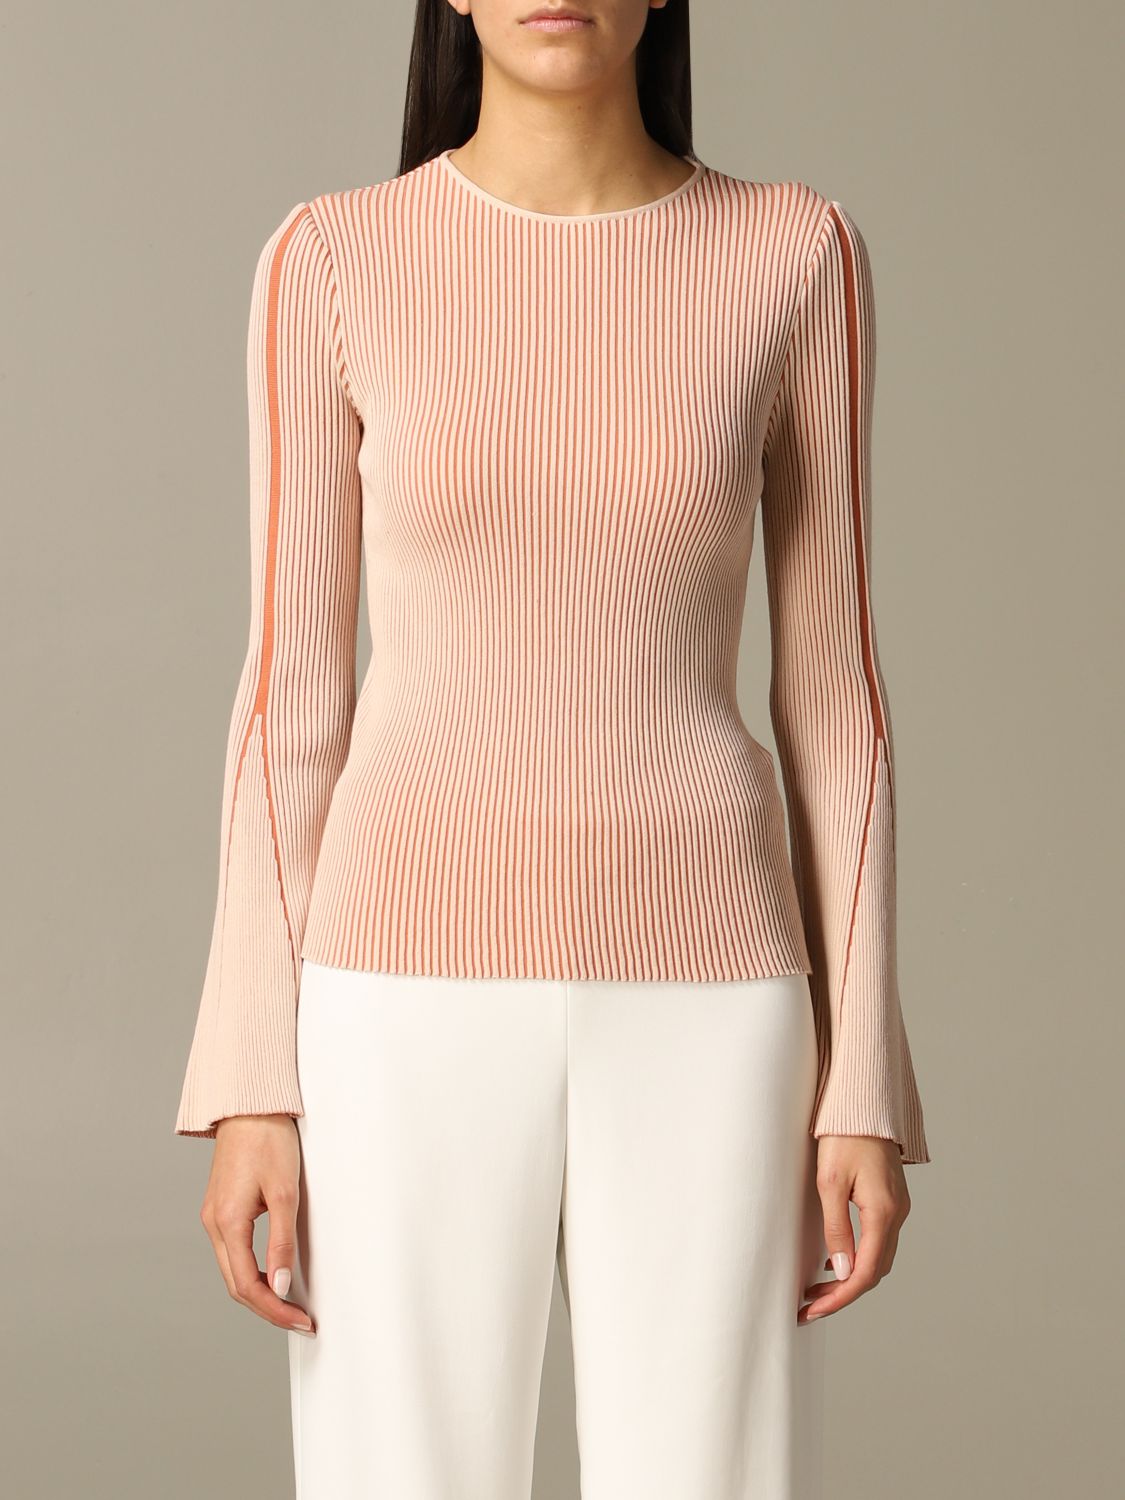 Emporio Armani Outlet: bicolor ribbed sweater - Pink | Emporio Armani ...